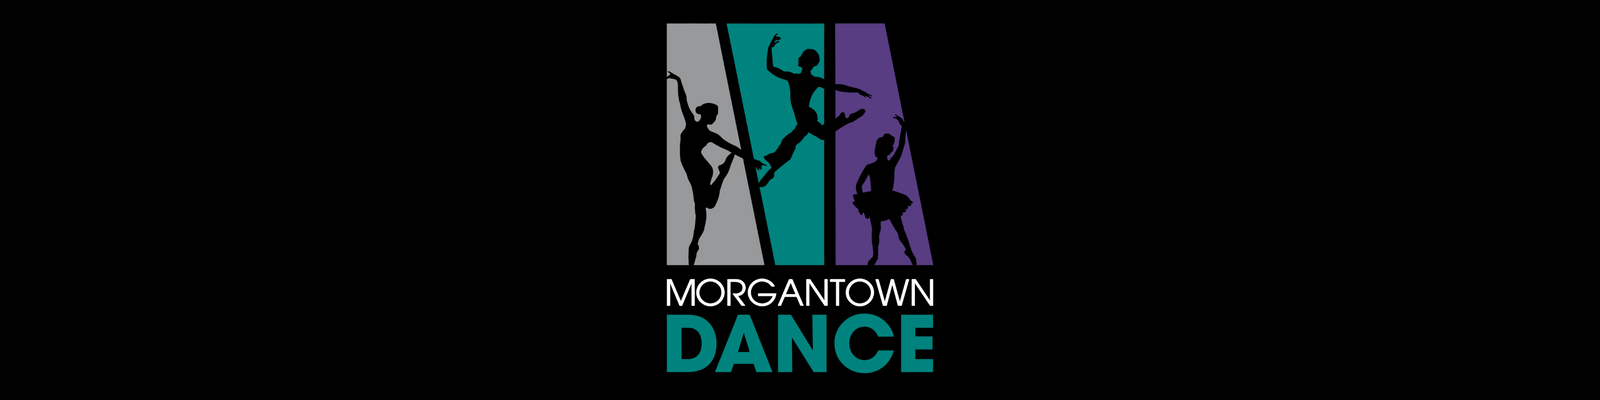 Morgantown Dance Merch